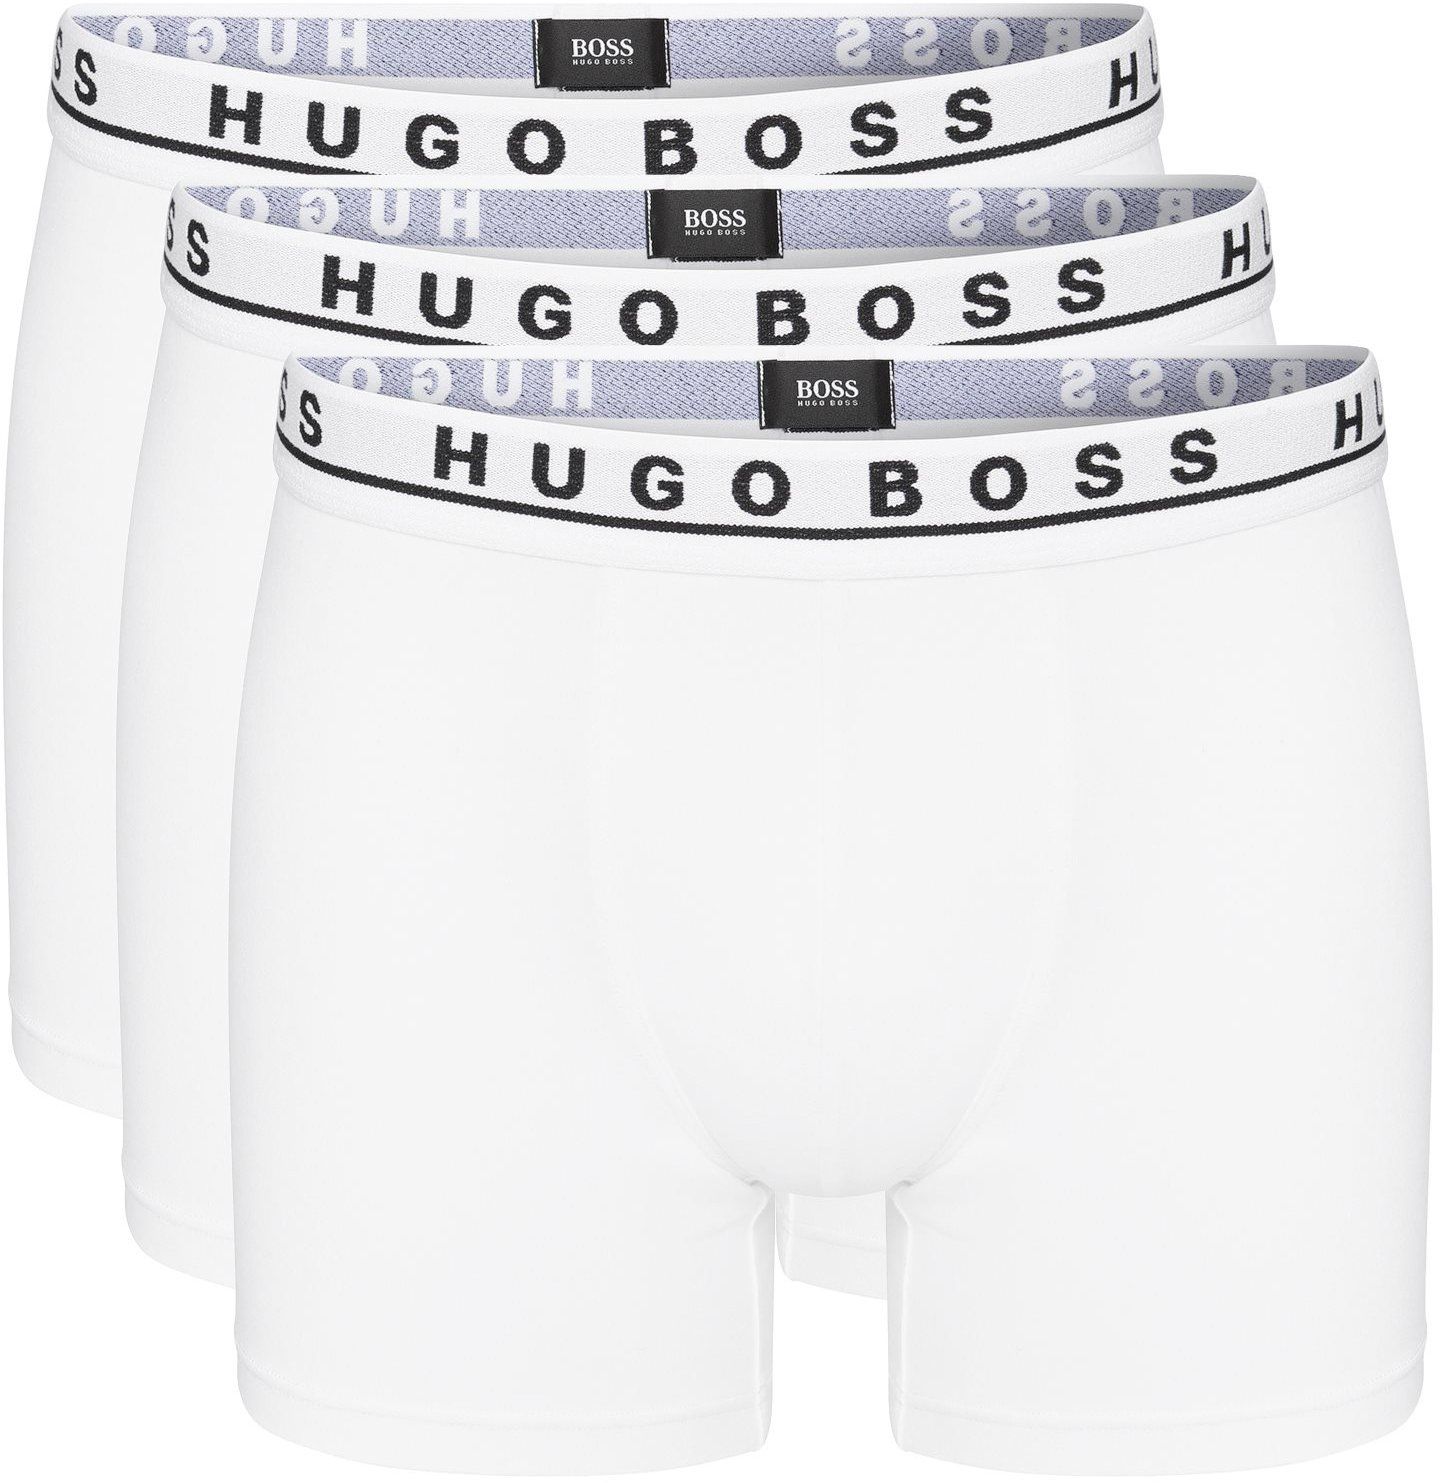 Hugo Boss Boxer Shorts Brief 3-Pack White size L